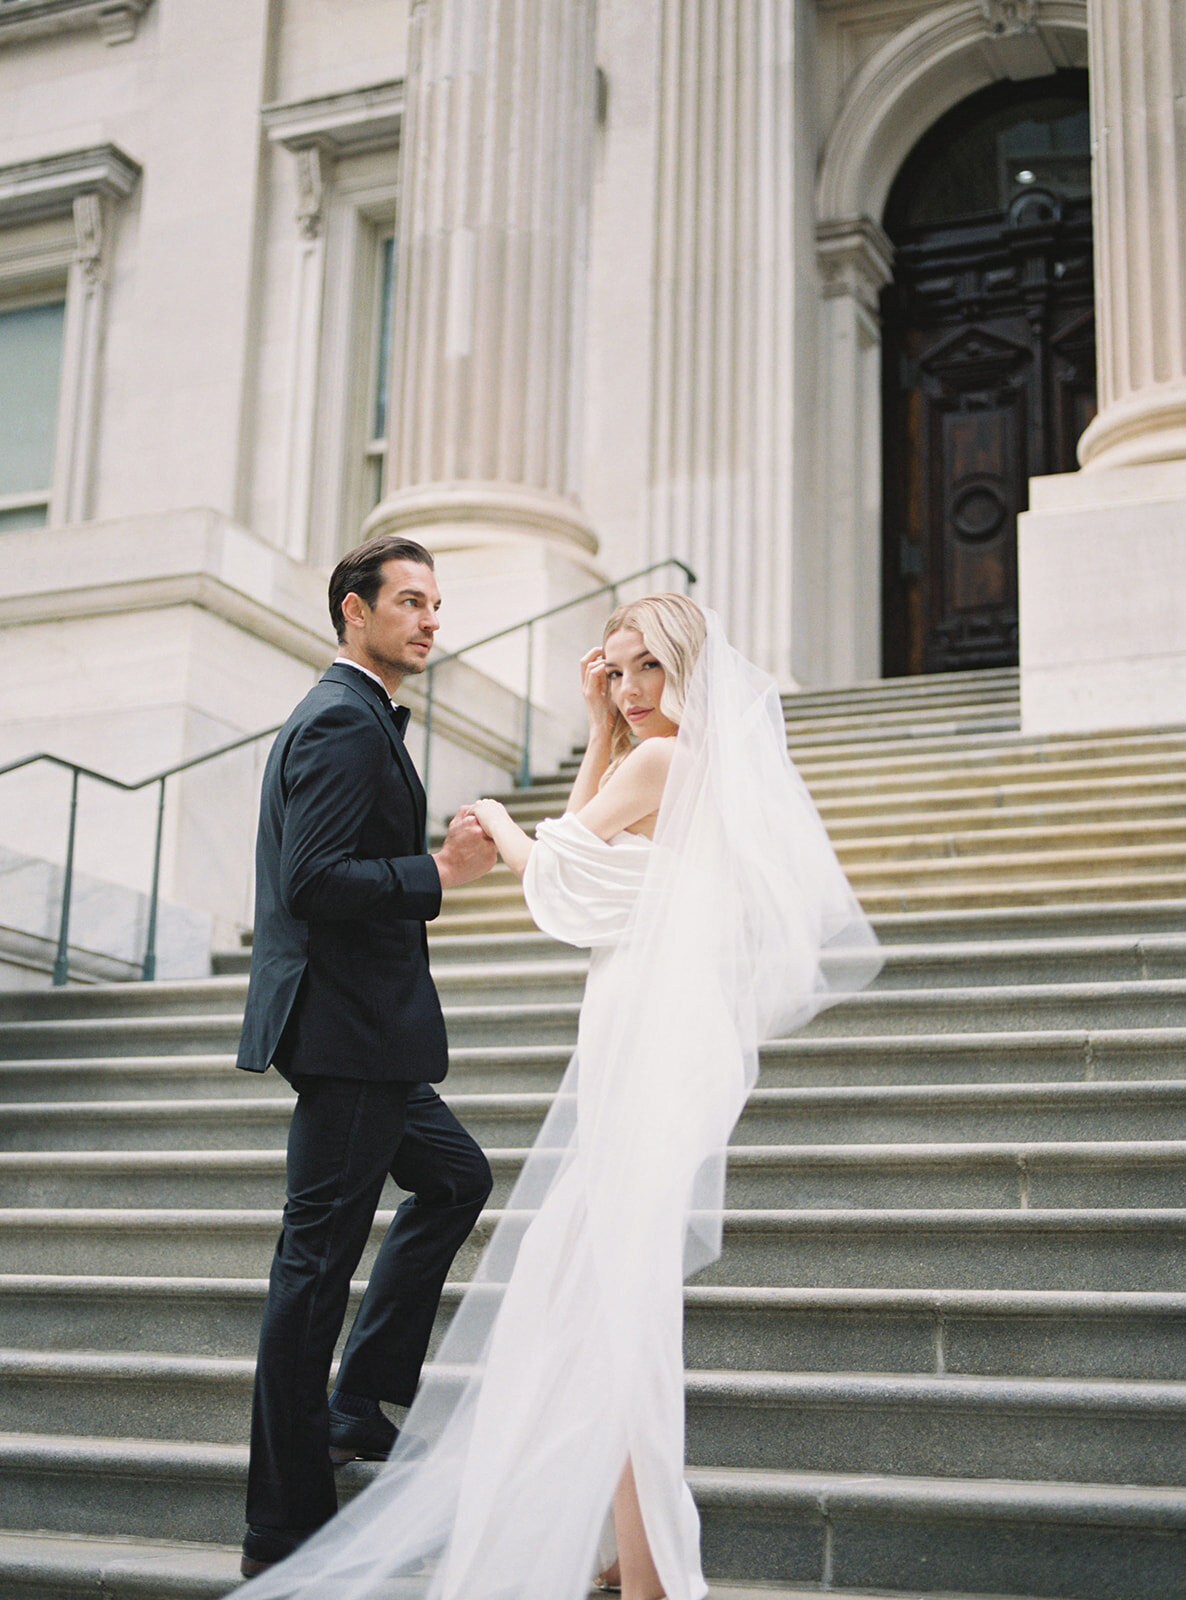 The Plaza Hotel - New York City - Elopement Wedding - Stephanie Michelle Photography - _stephaniemichellephotog - 0-R1-E006